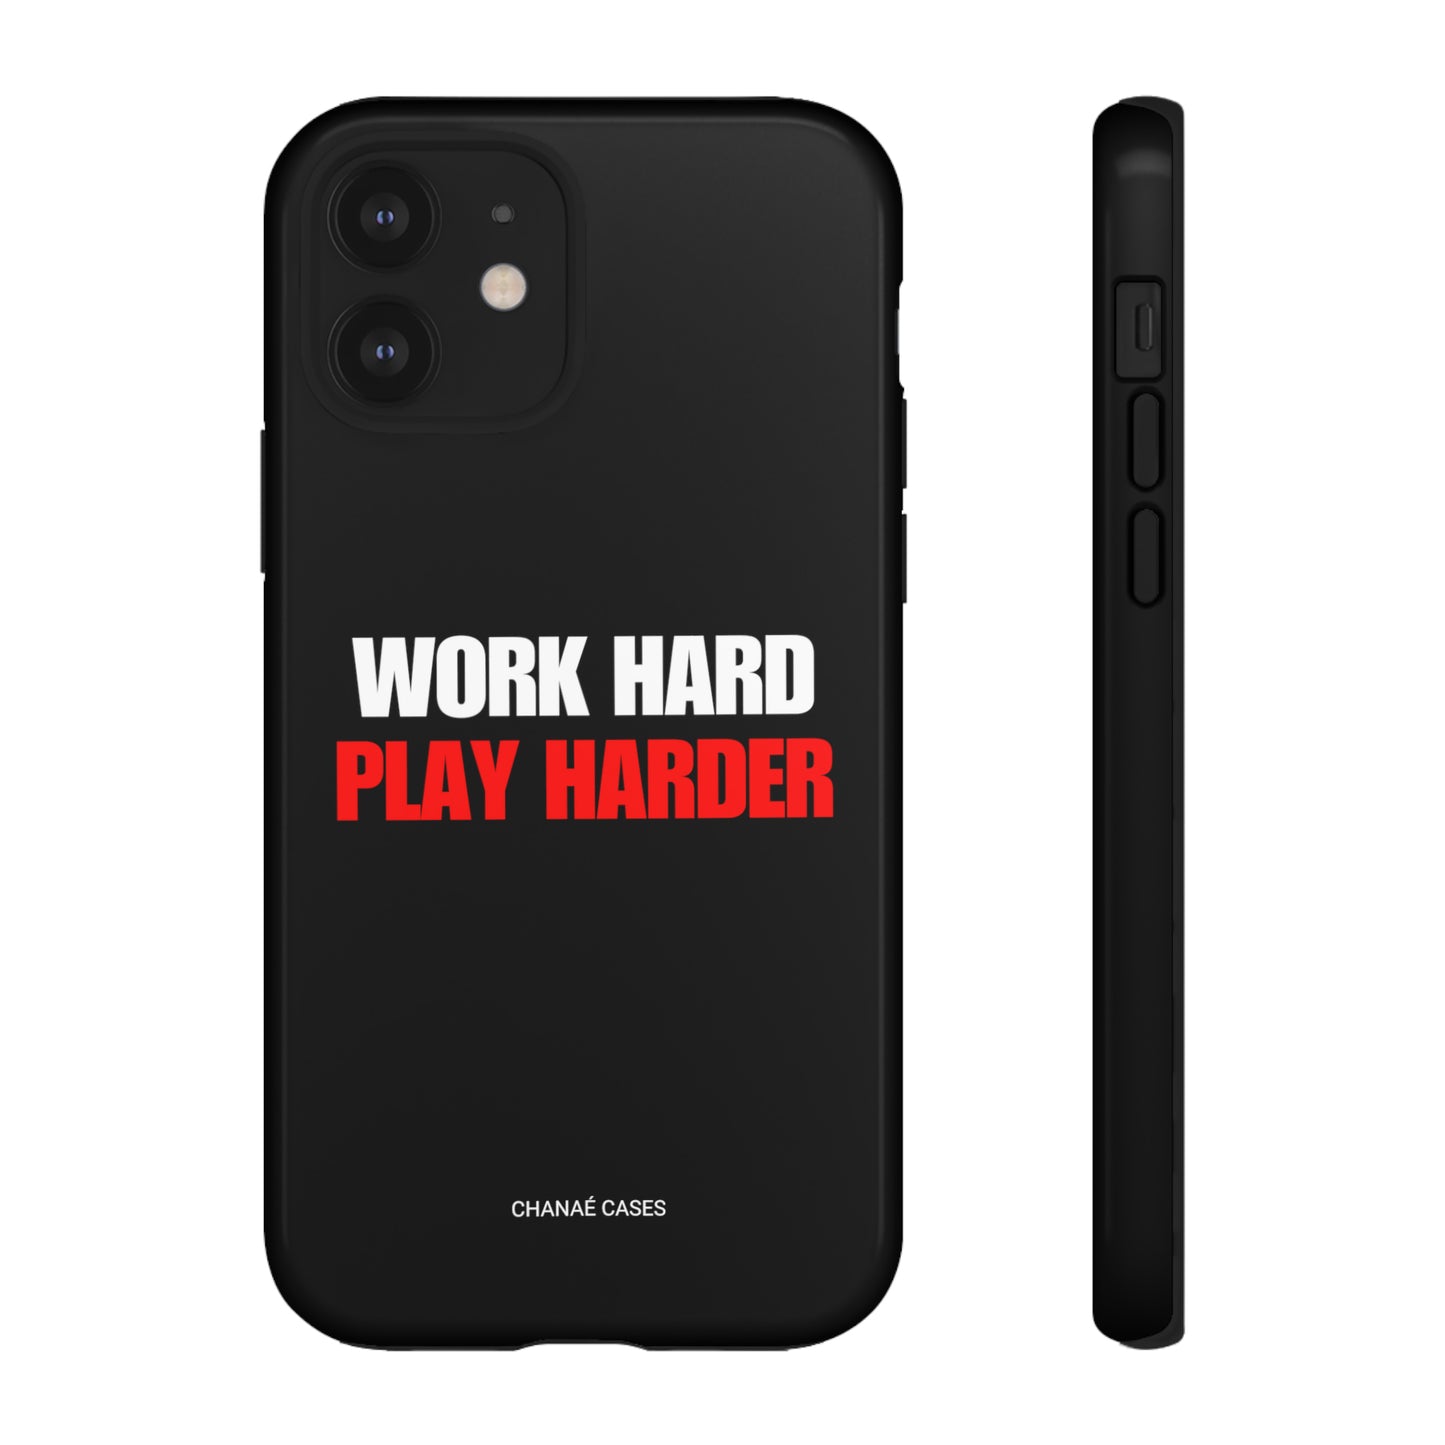 Work Hard Play Harder iPhone "Tough" Case (Black)